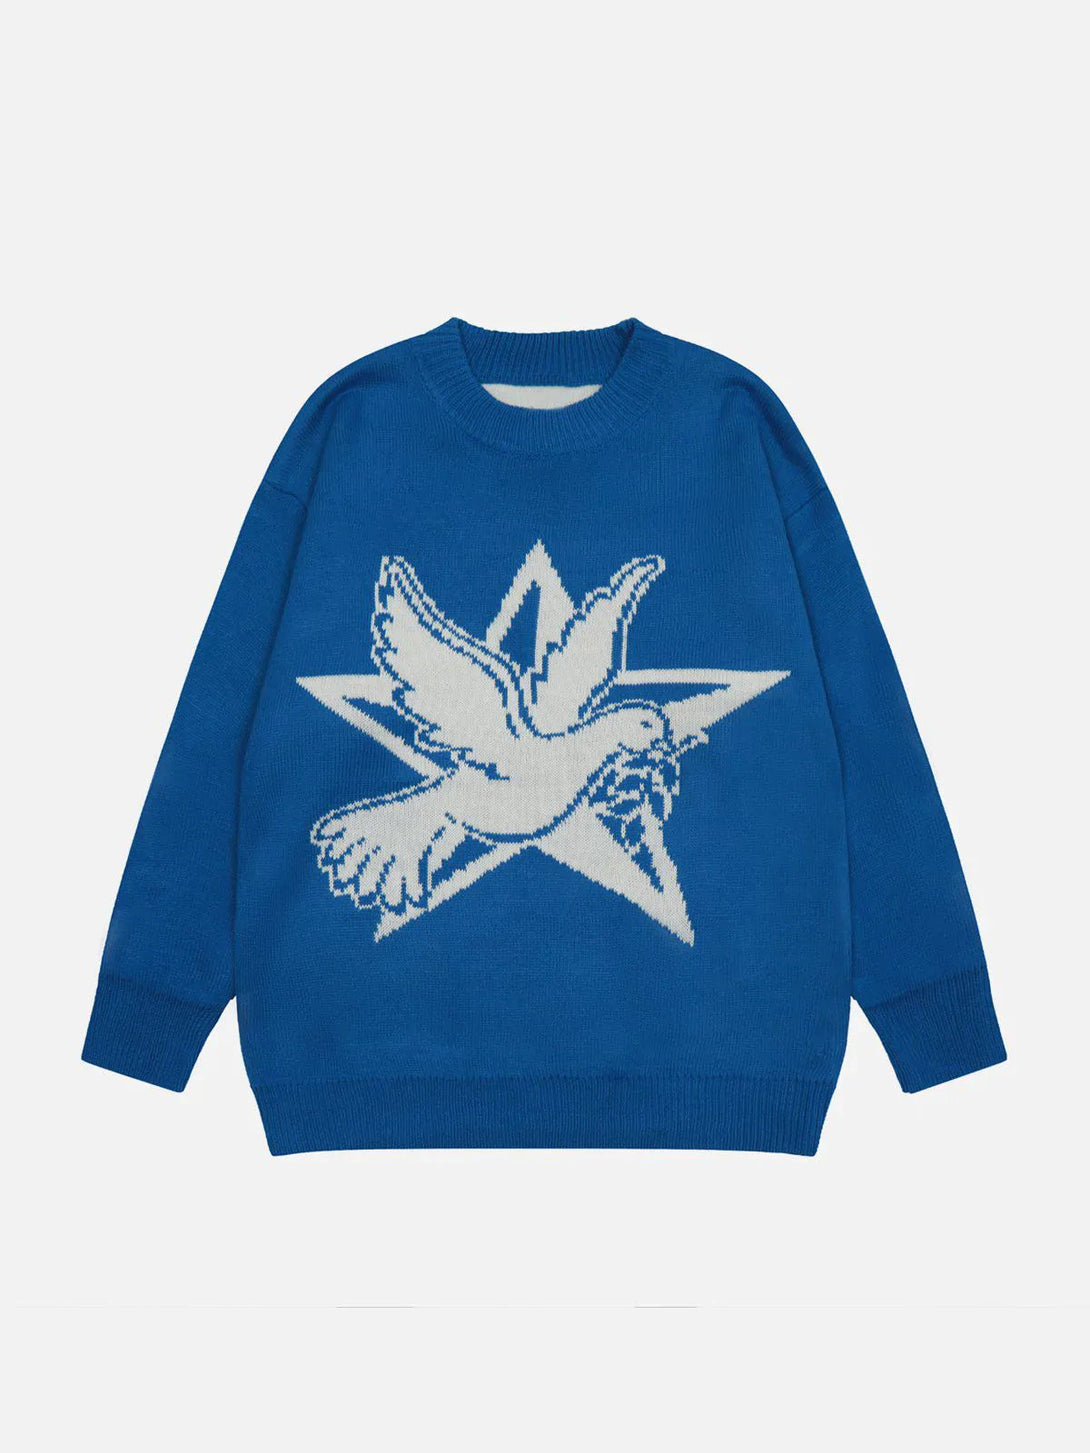 Majesda® - Dove Of Peace Print Sweater outfit ideas streetwear fashion